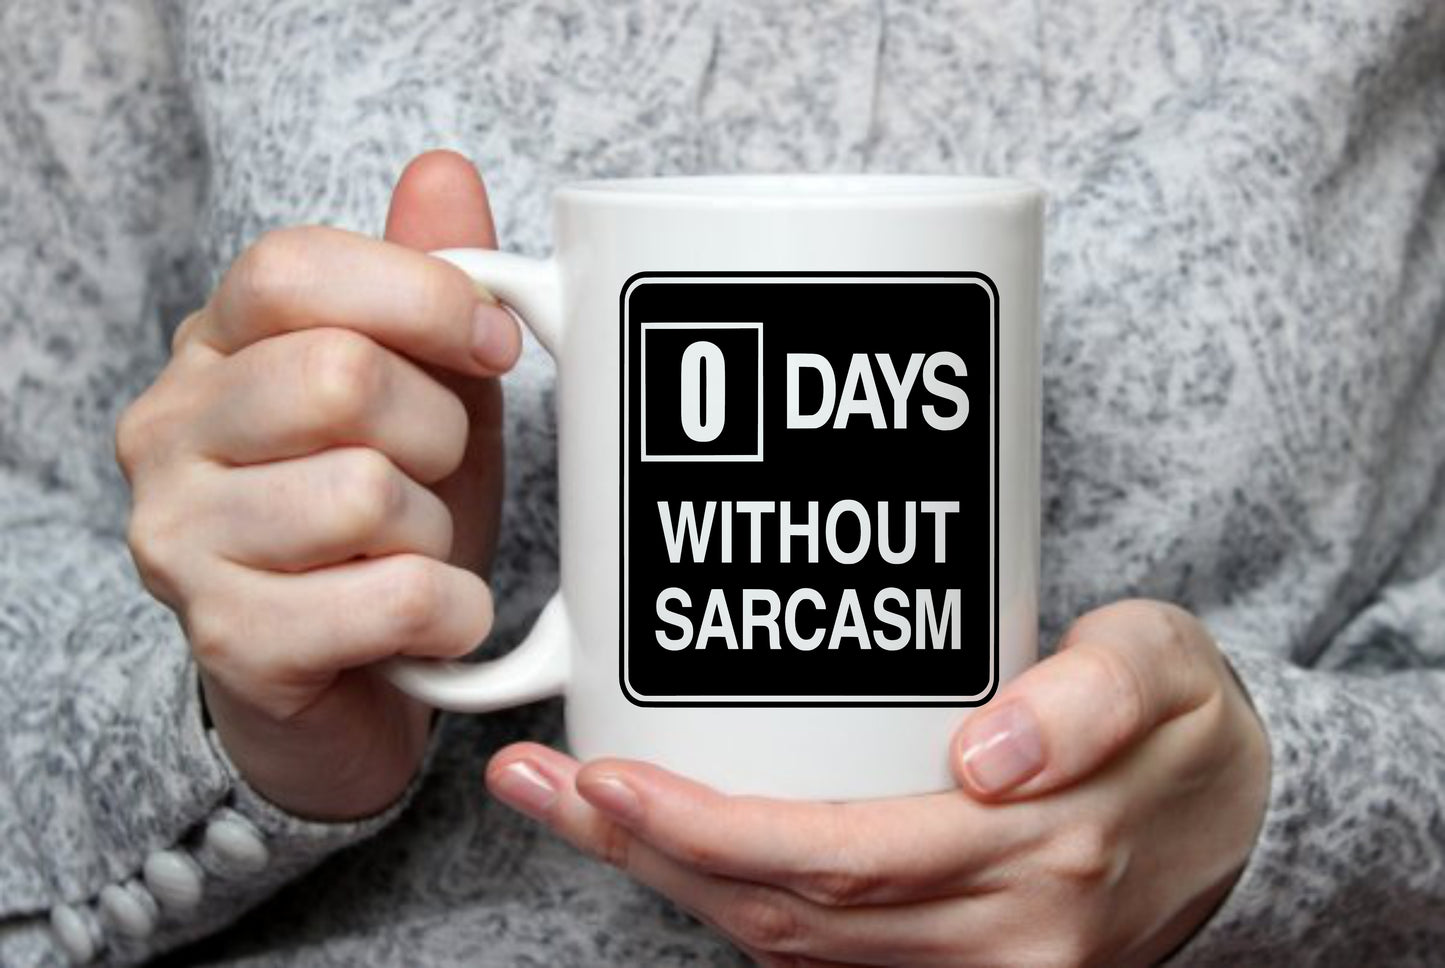 0 Days Without Sarcasm Sarcastic, 15 oz Mug